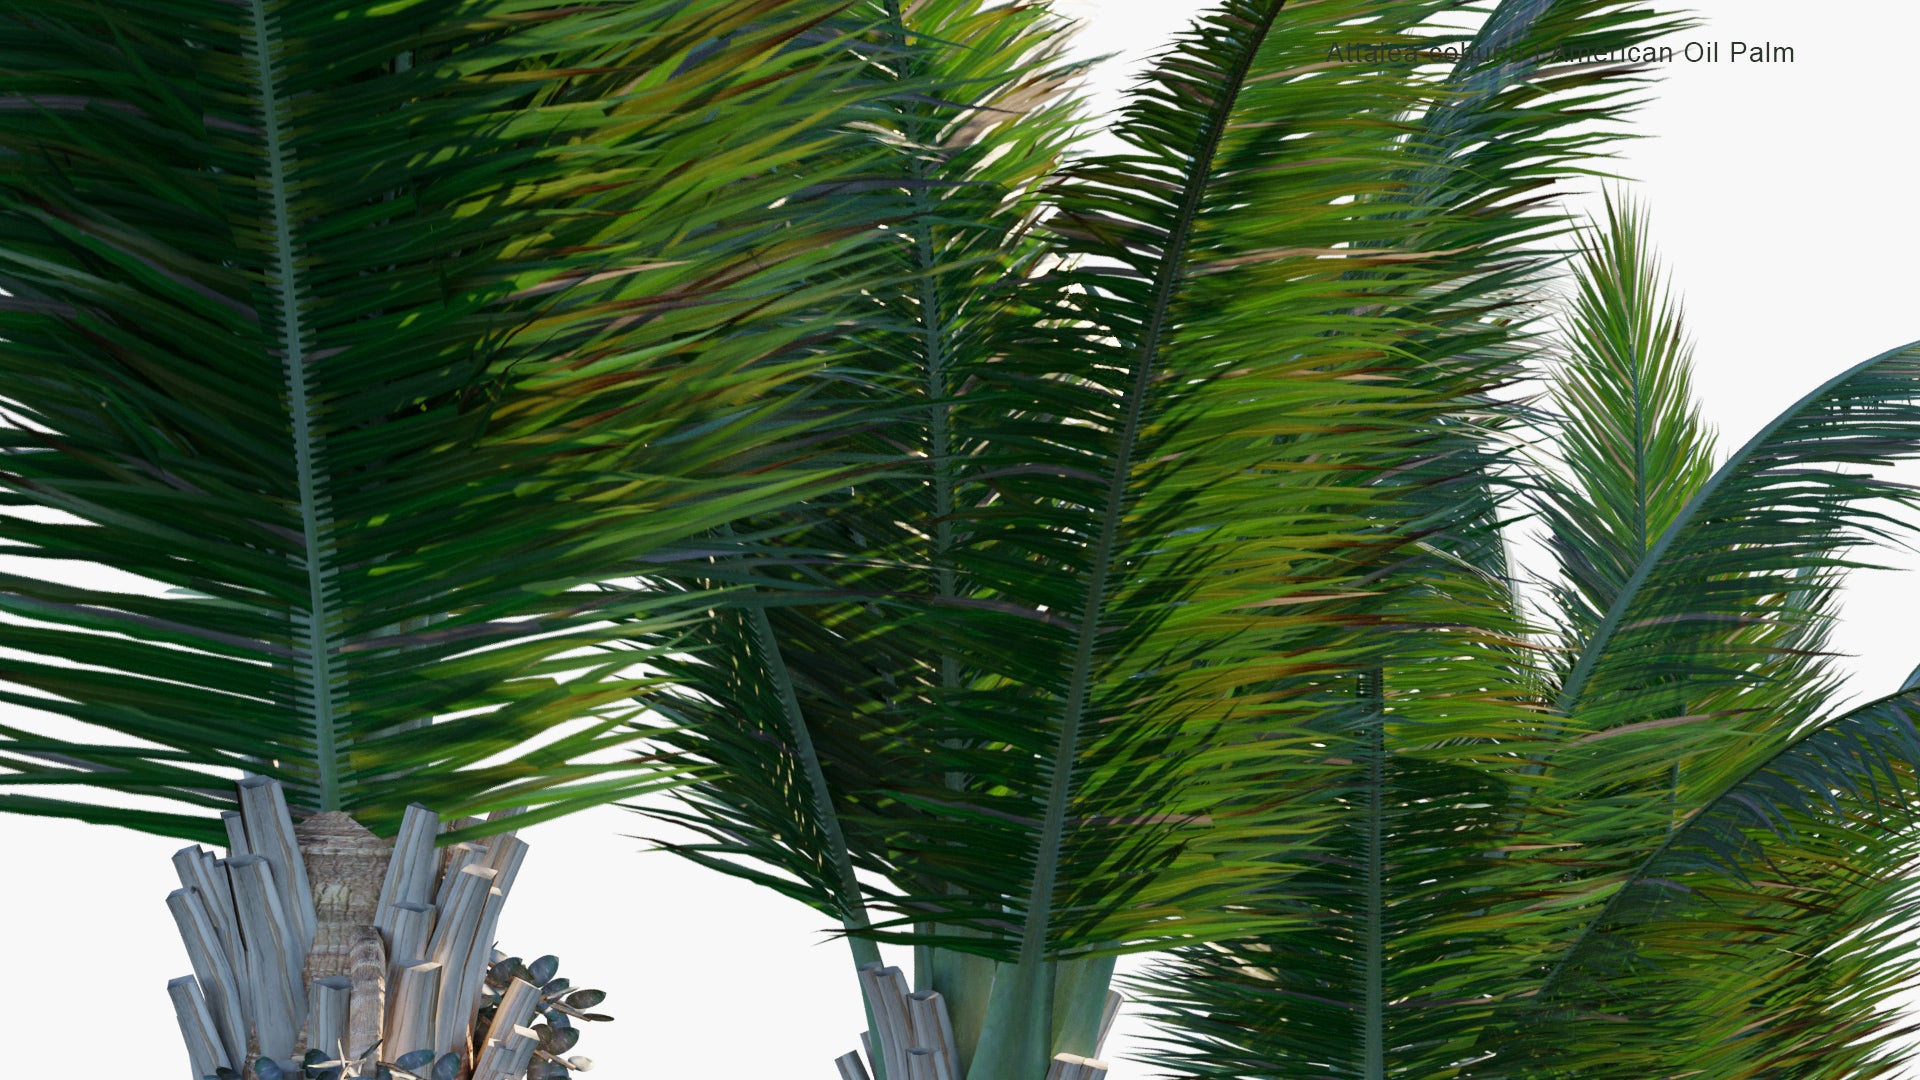 Low Poly Attalea Cohune - Cohune Palm, Rain Tree, American Oil Palm, Corozo Palm, Manaca Palm (3D Model)